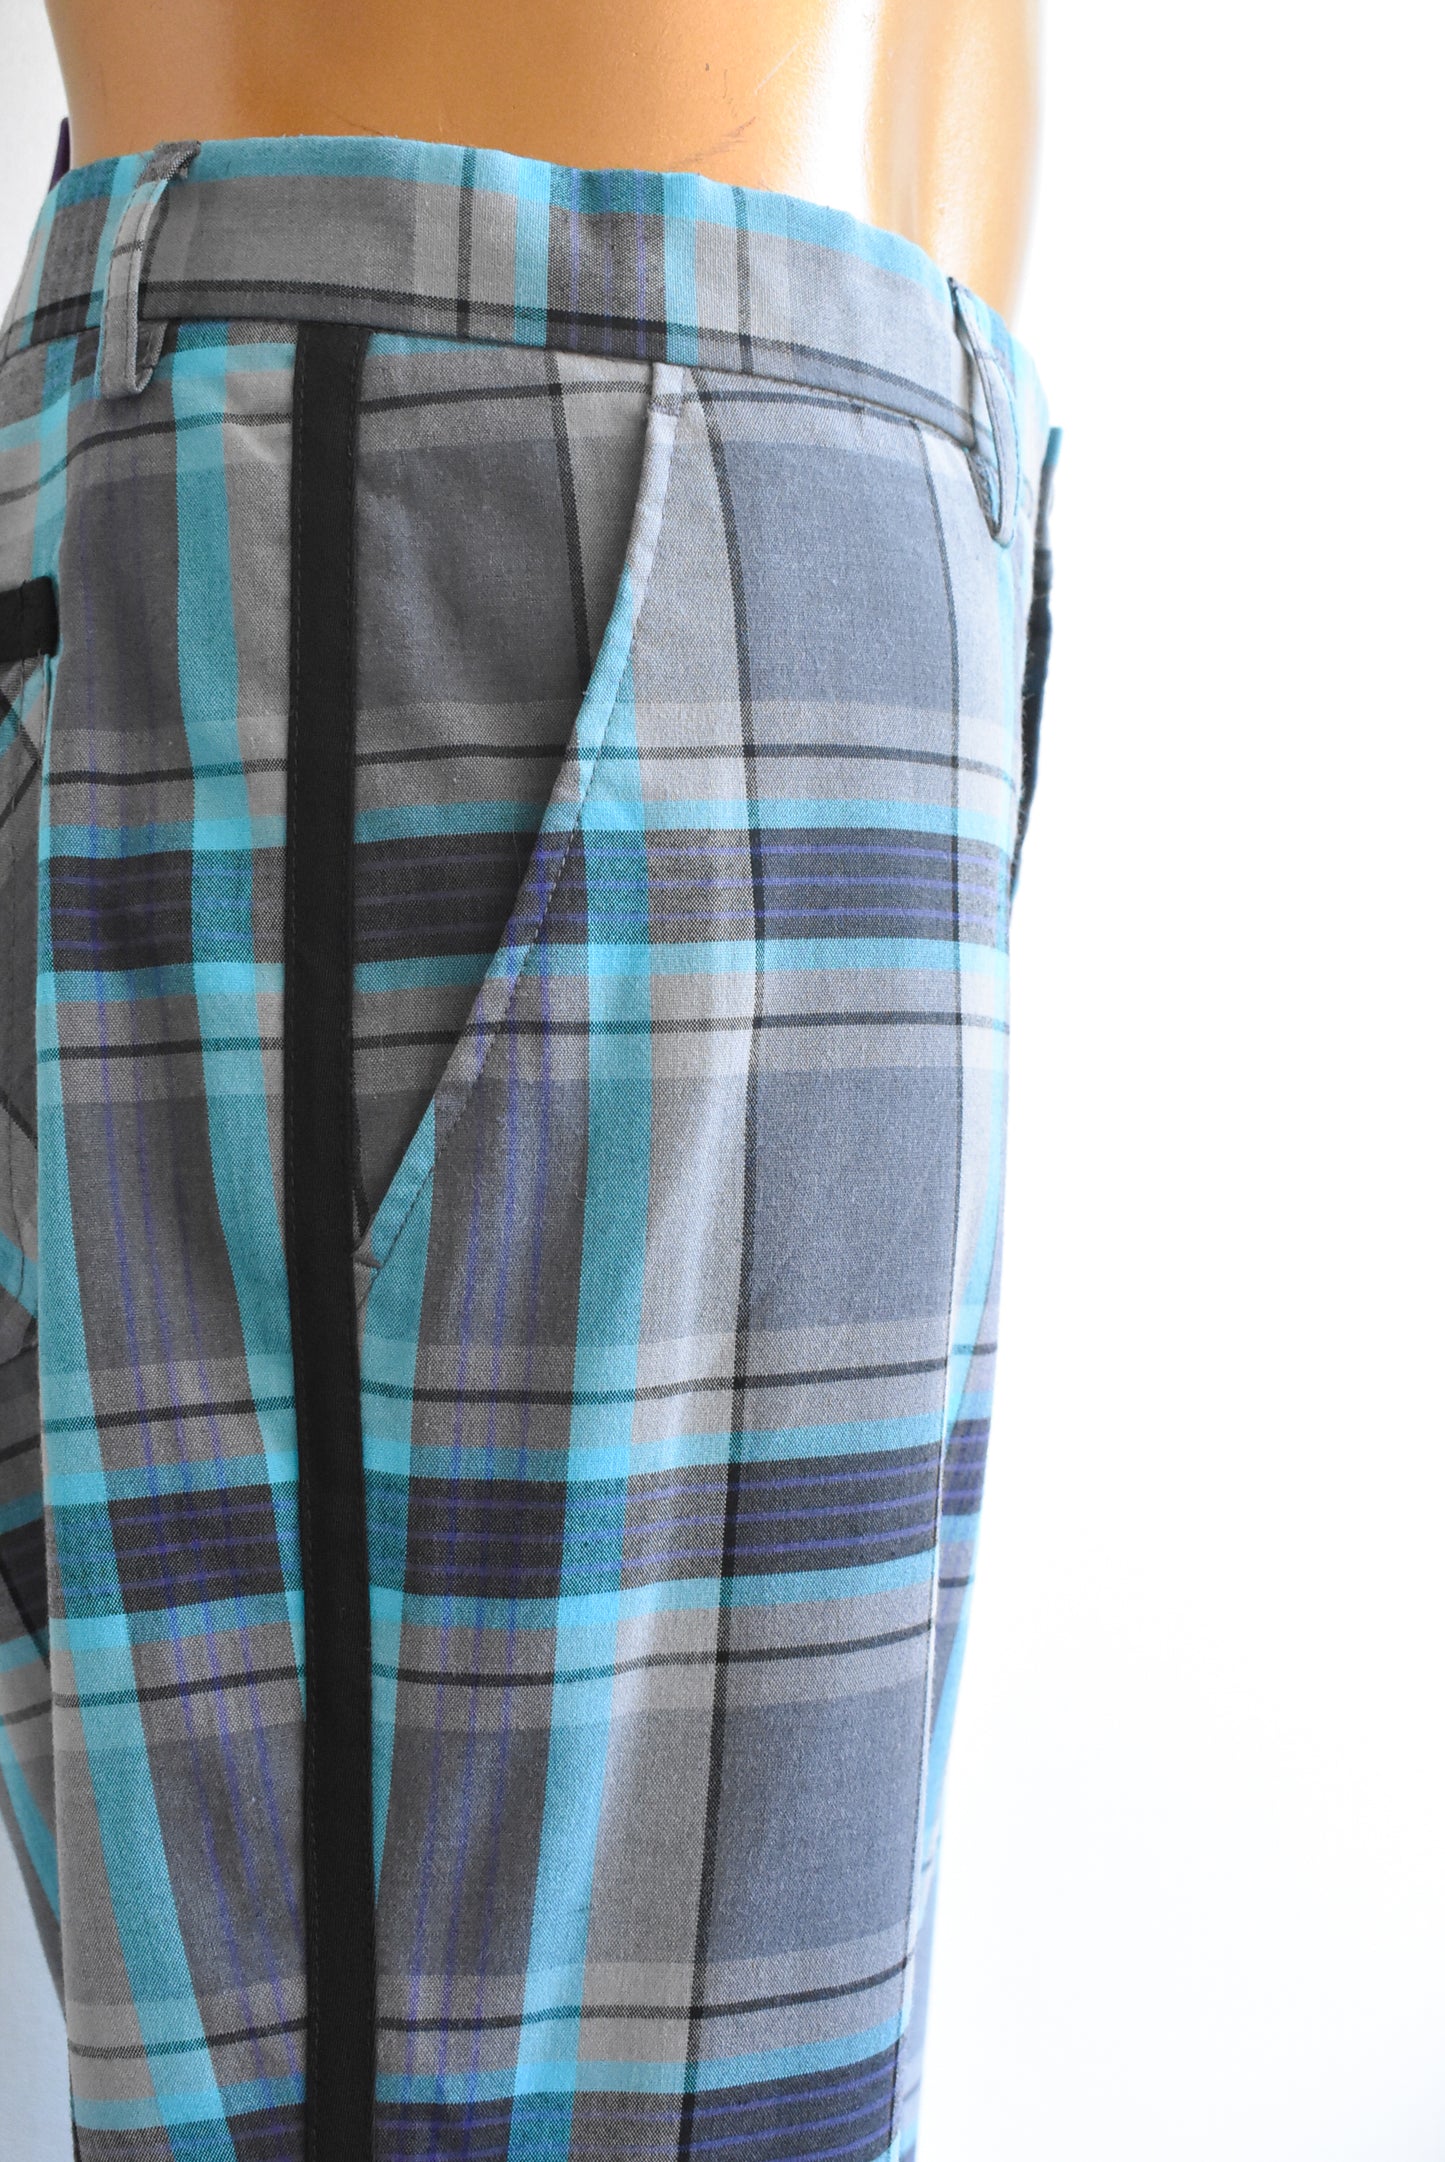 Sligo men's plaid golf trousers, size 36